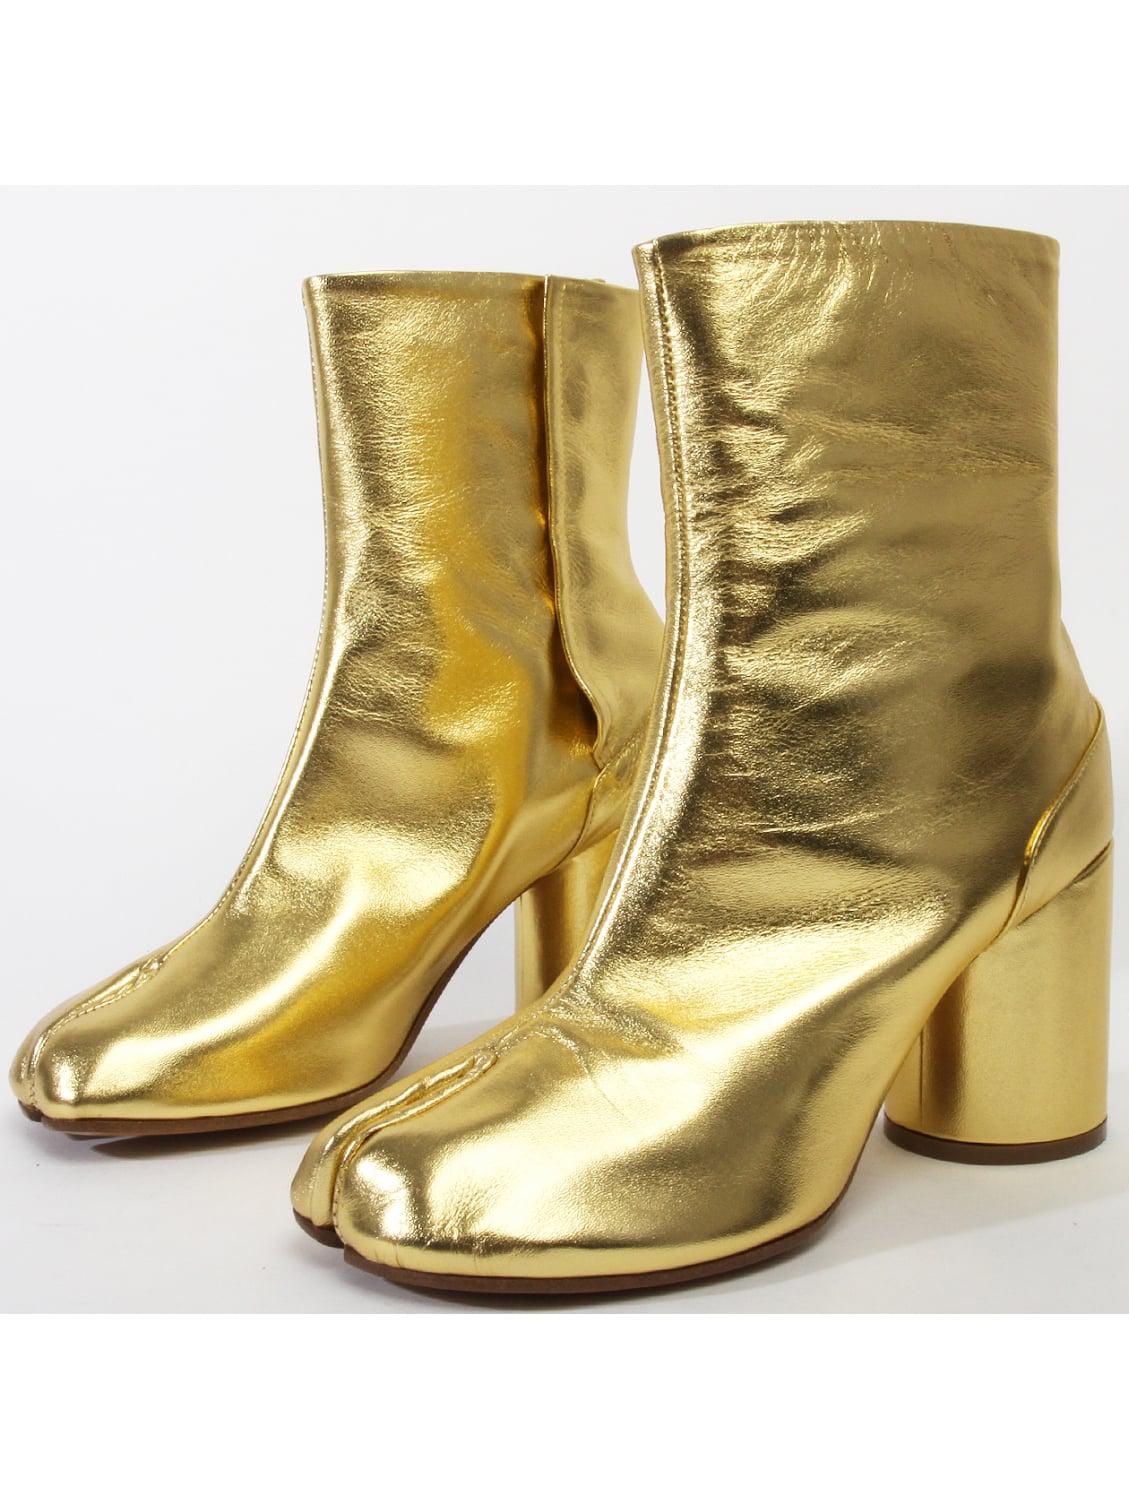 Maison Margiela Leather Tabi Boot in Gold (Metallic) - Lyst